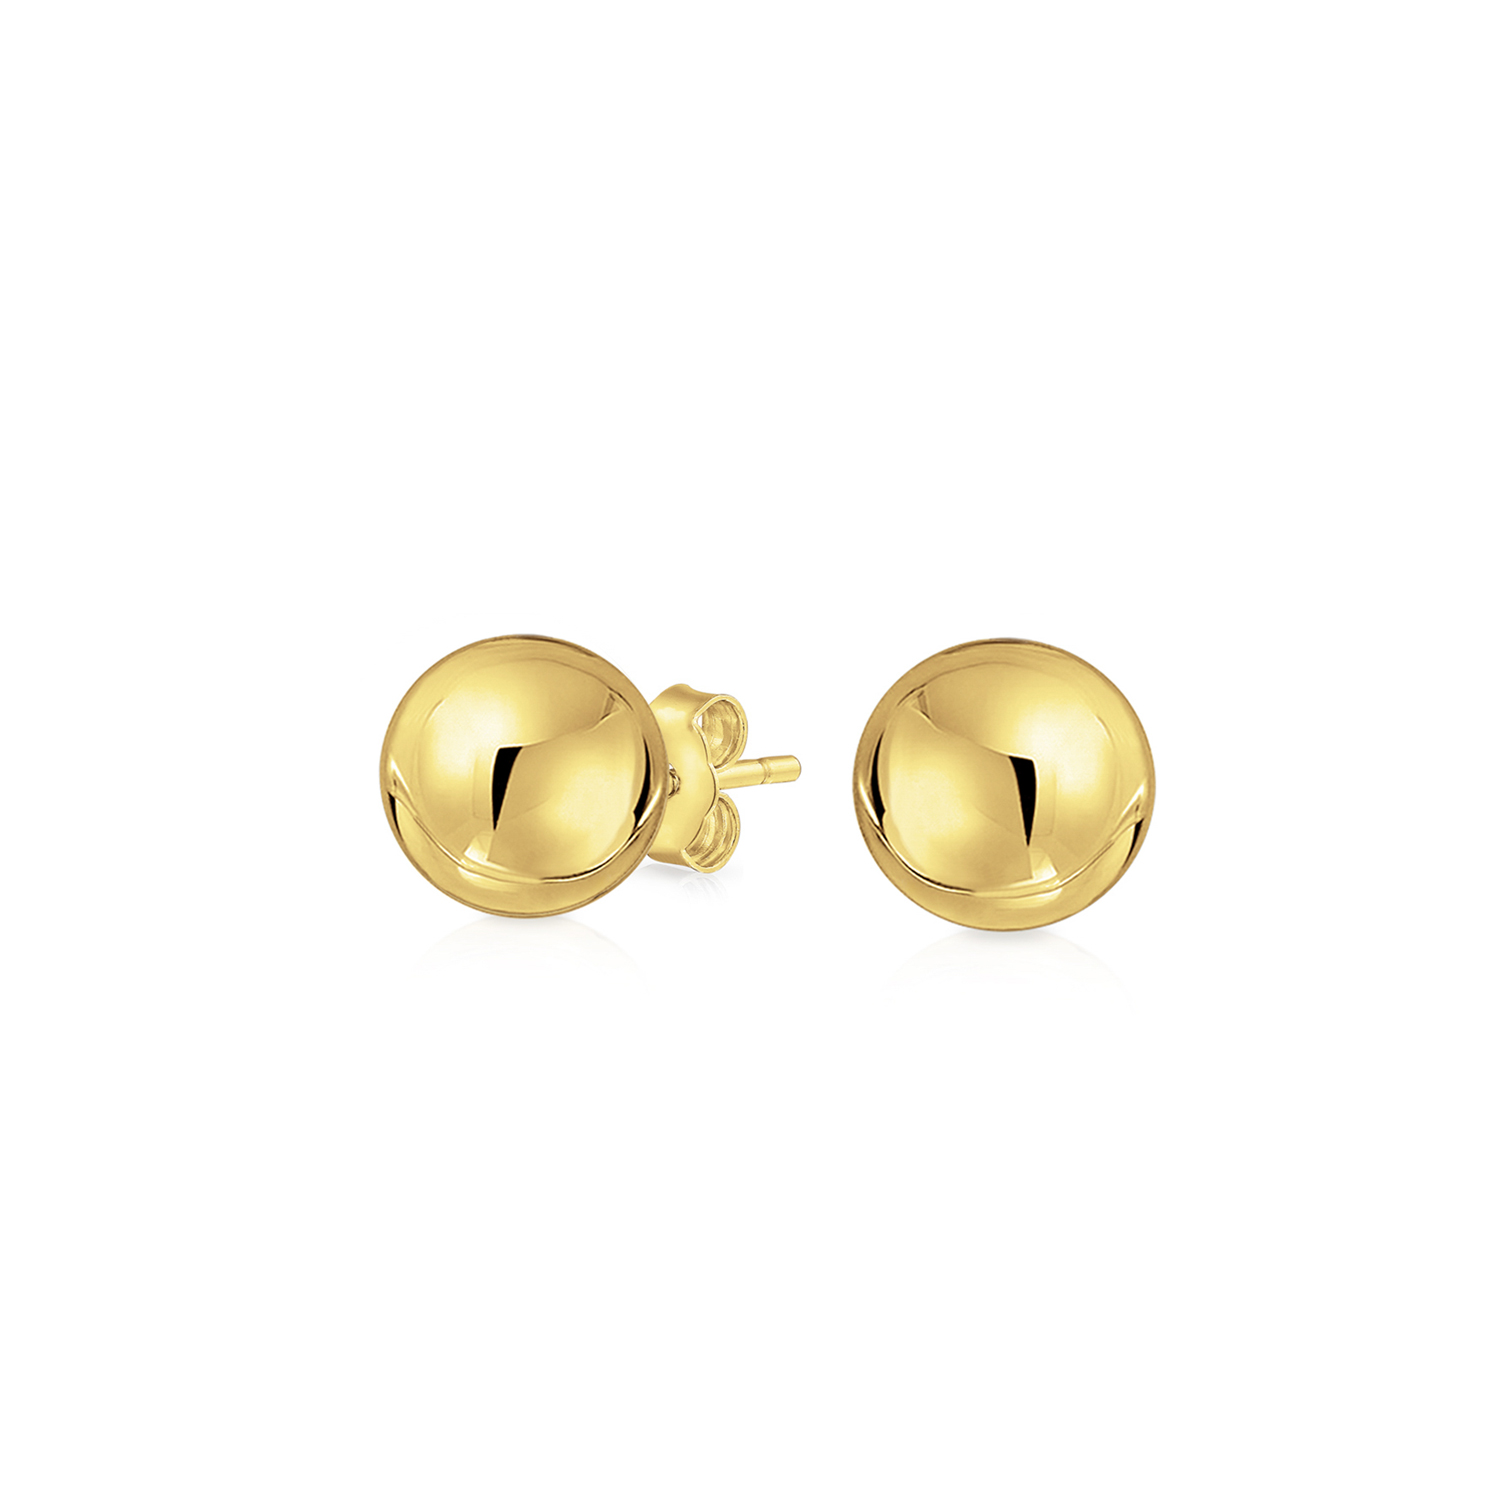 Gold pebble earrings Simple gold stud earrings 14k goldfilled post earrings Gold earrings Tiny gold stud earrings Small round posts